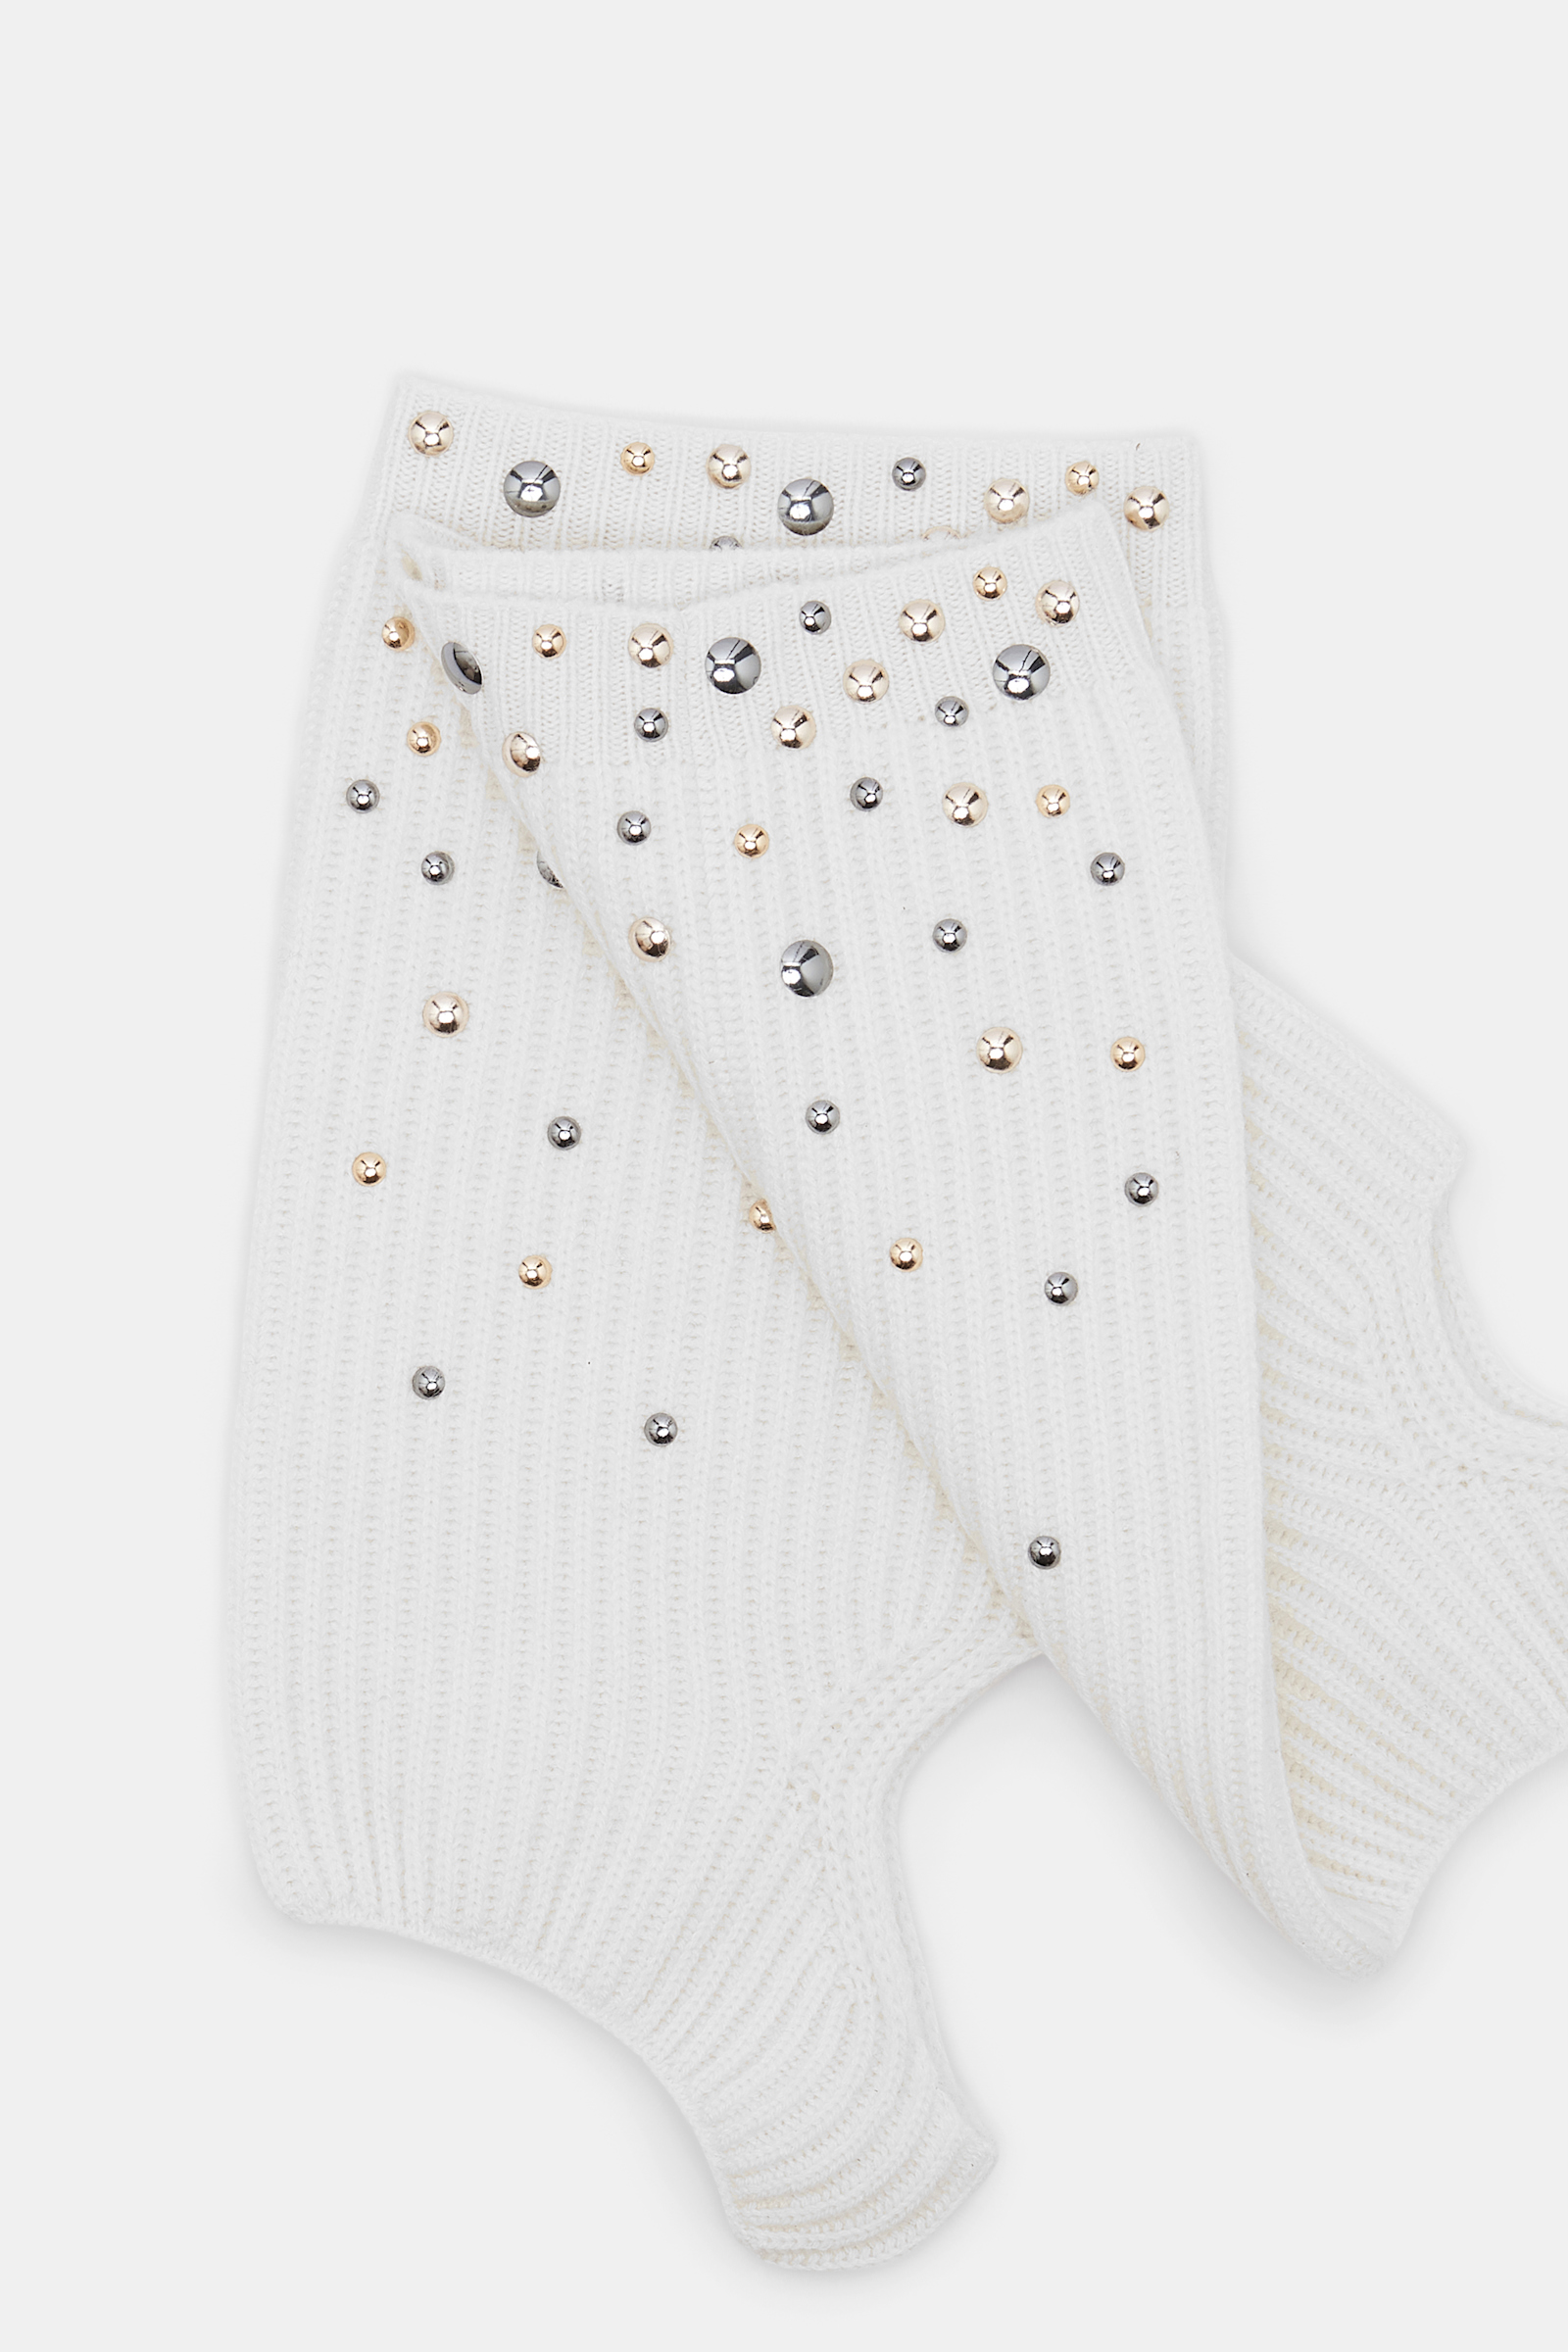 Dorothee Schumacher Stud-embellished cashmere leg warmers cozy white